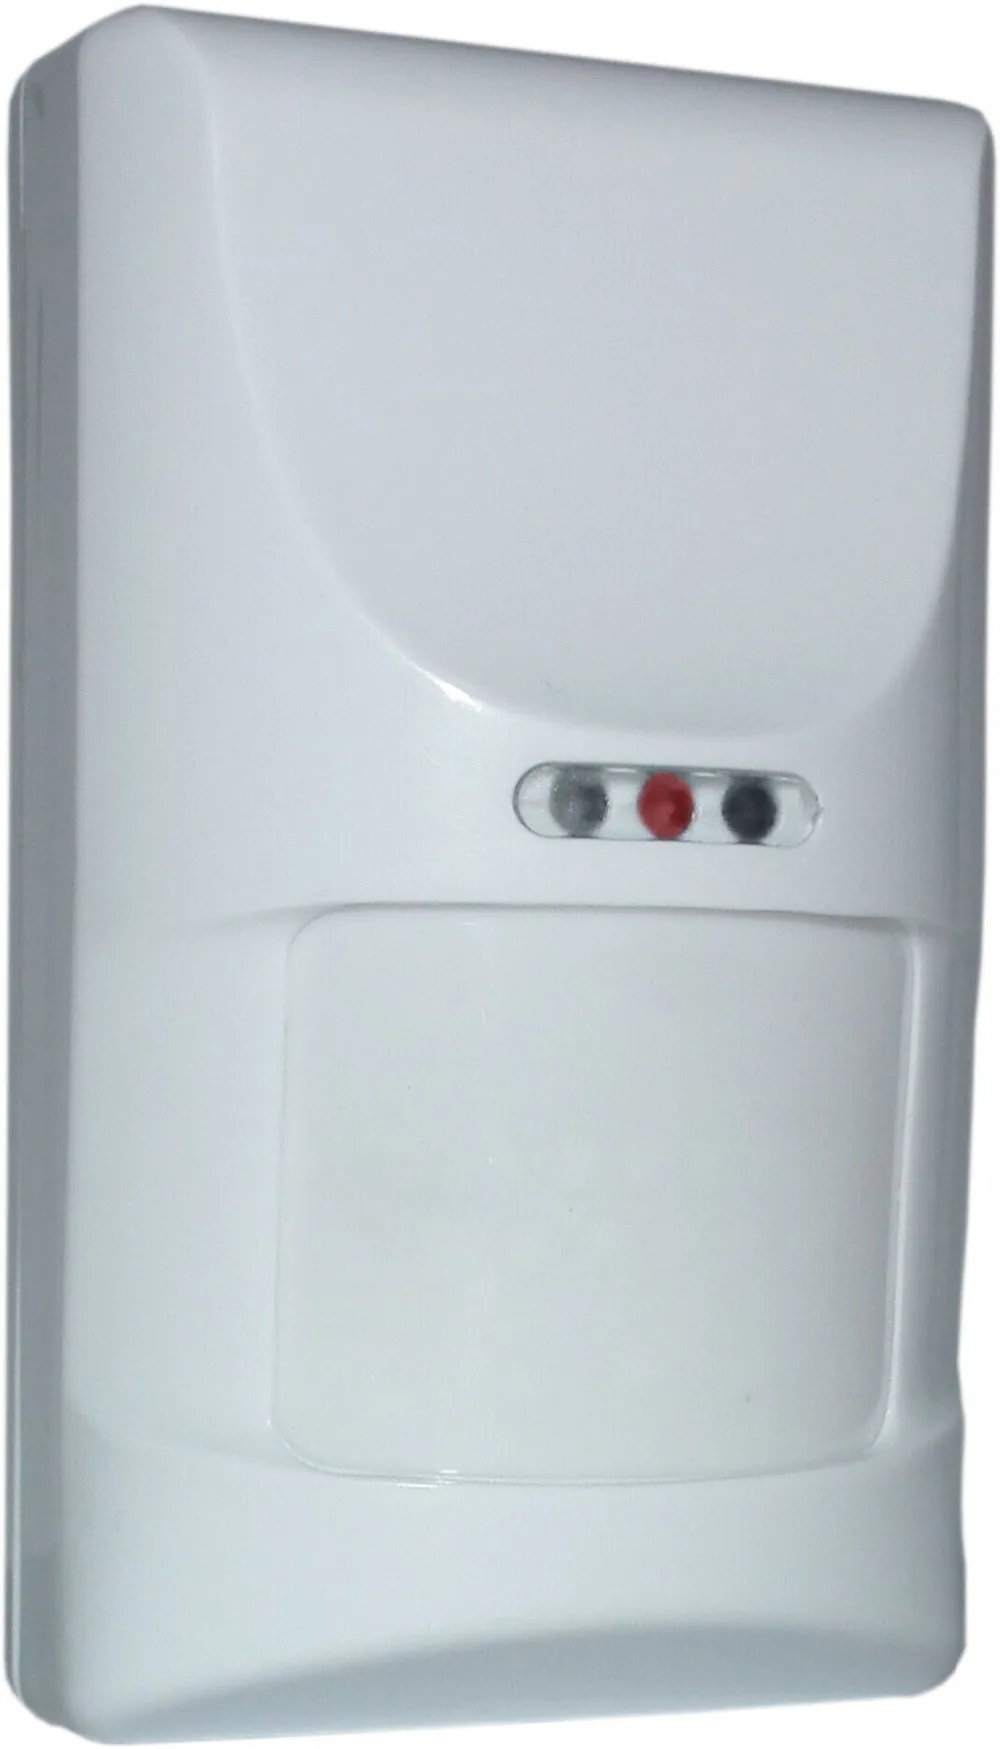 Intelligent wireless PIR motion sensor for home security alarm system &amp; pet-immunity PIR motion sensor